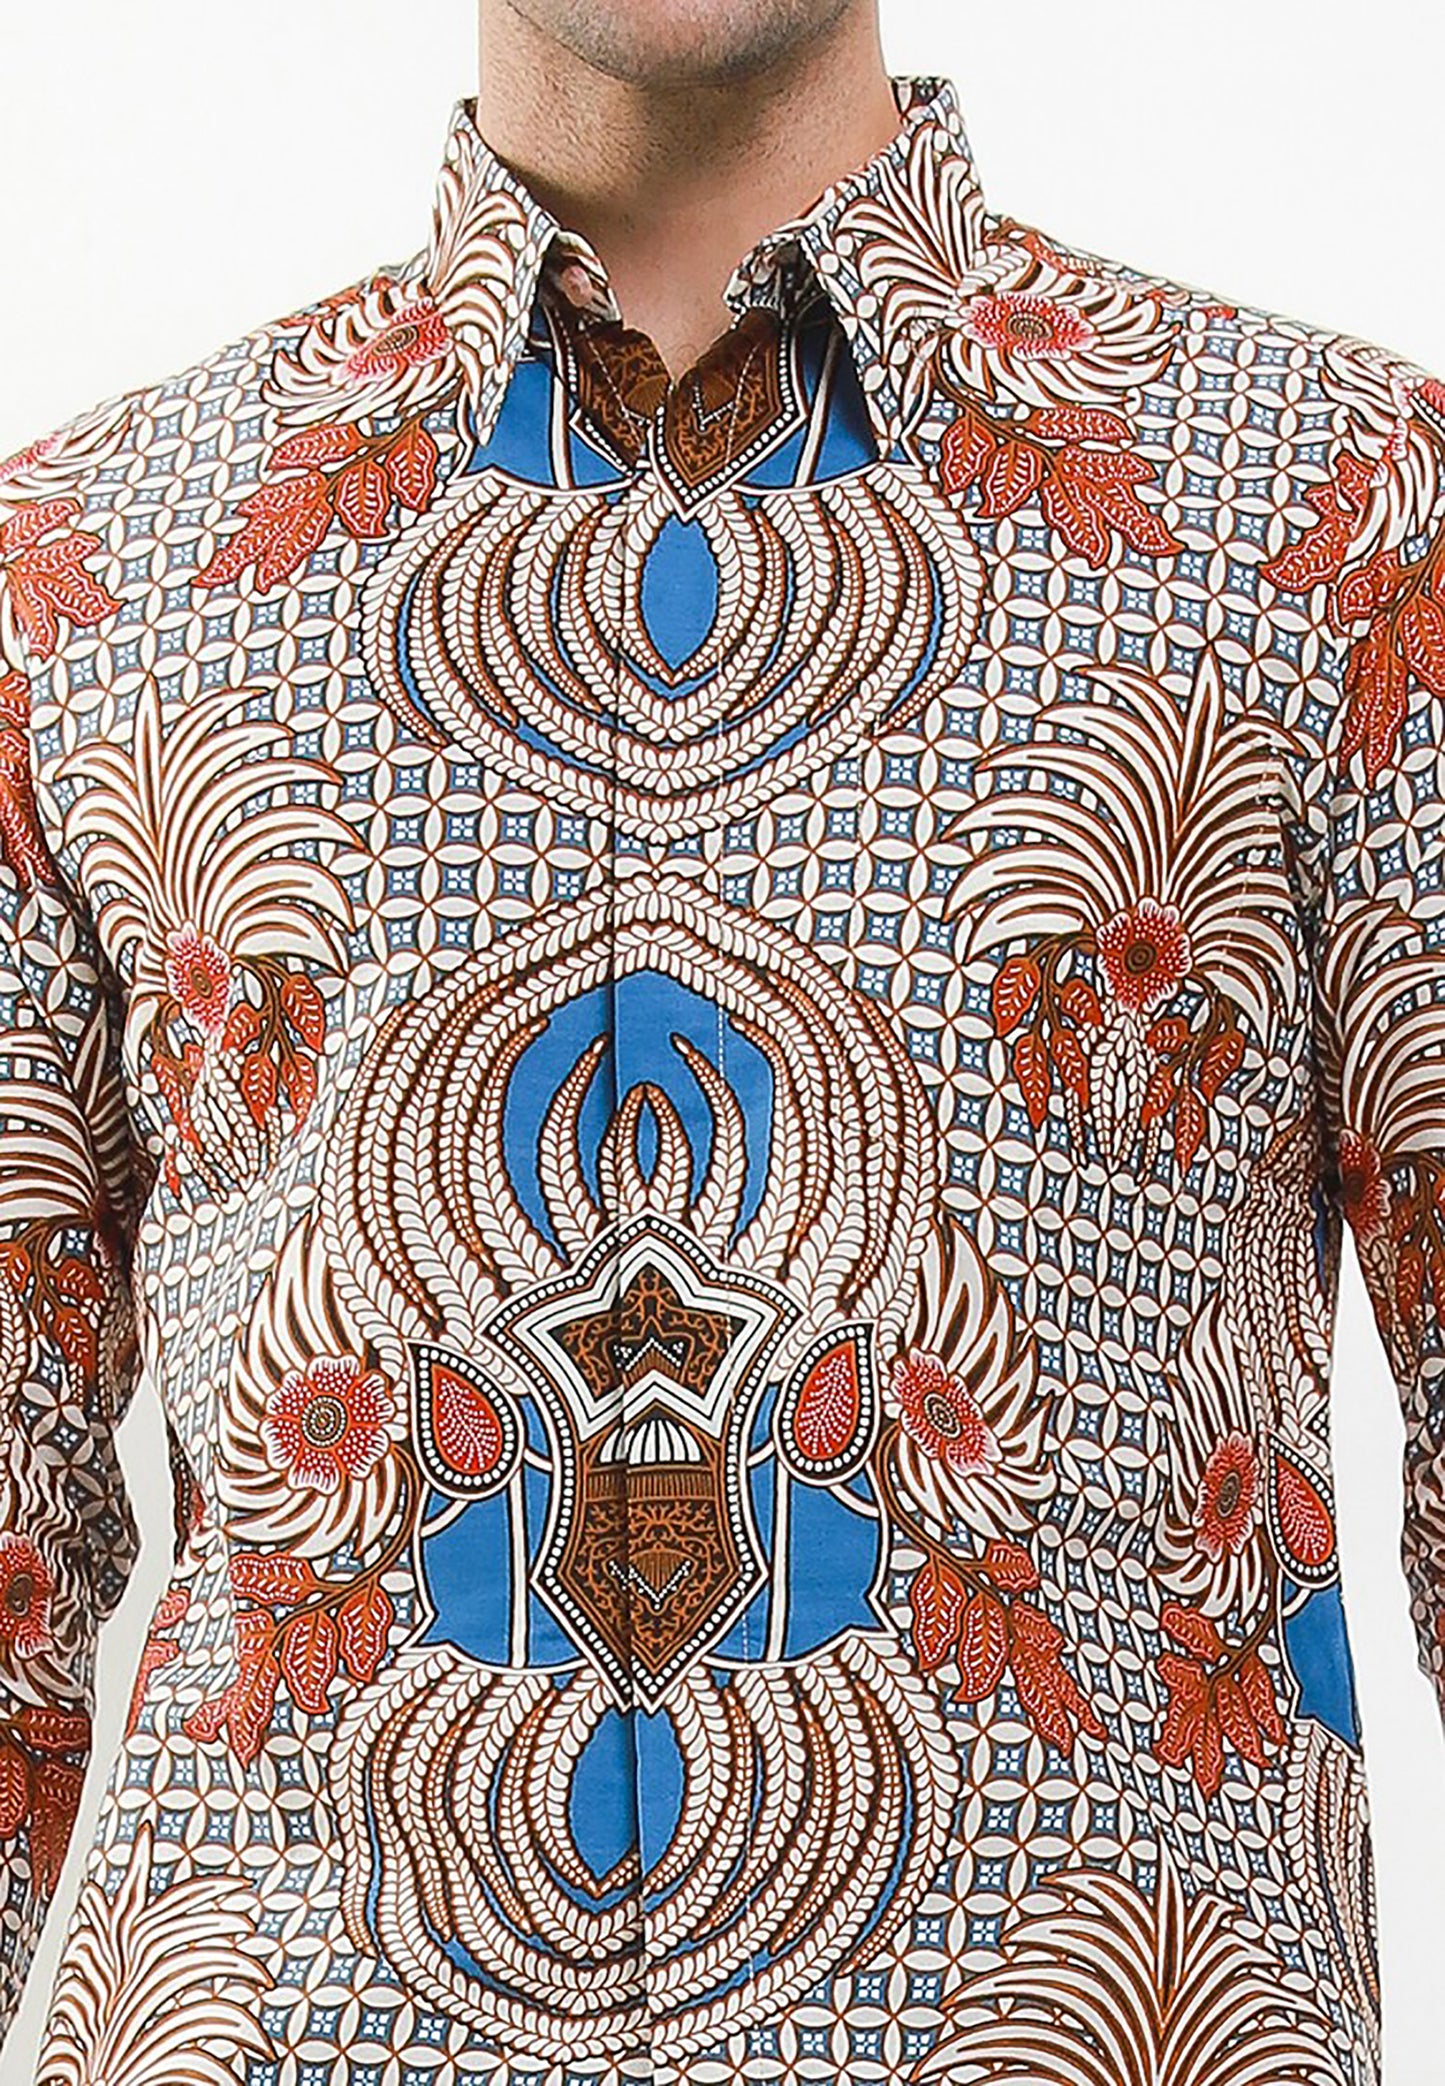 Regal Elegance Arjuna's Wisdom Mahkota Raja Batik Men's Shirt, Men Batik, Batik, Men Batik Shirt, Men's Batik Shirts